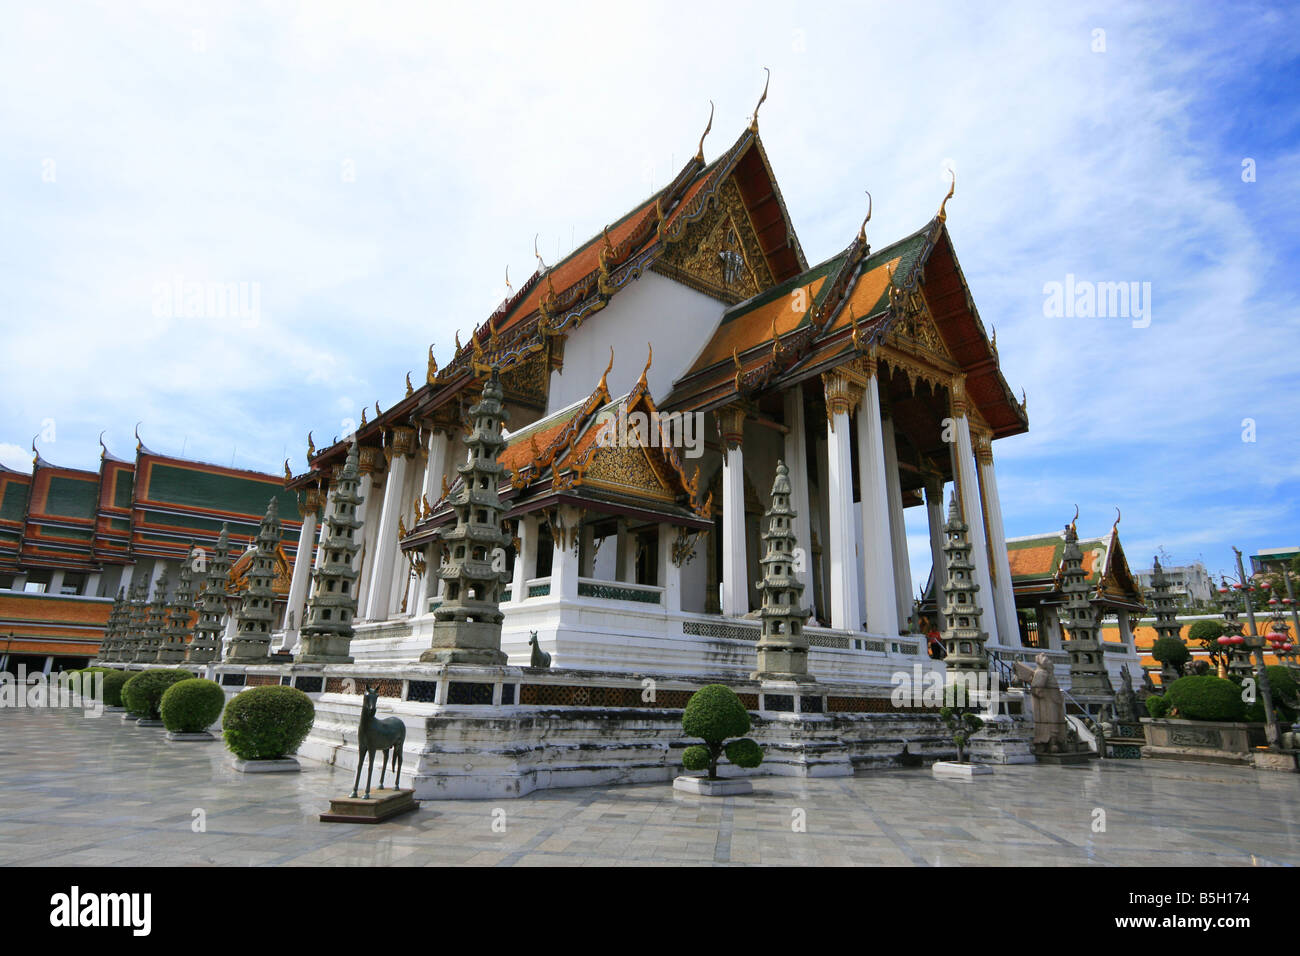 Ubosot of Wat Suthat Thepwararam, Bangkok, Thailand. Stock Photo